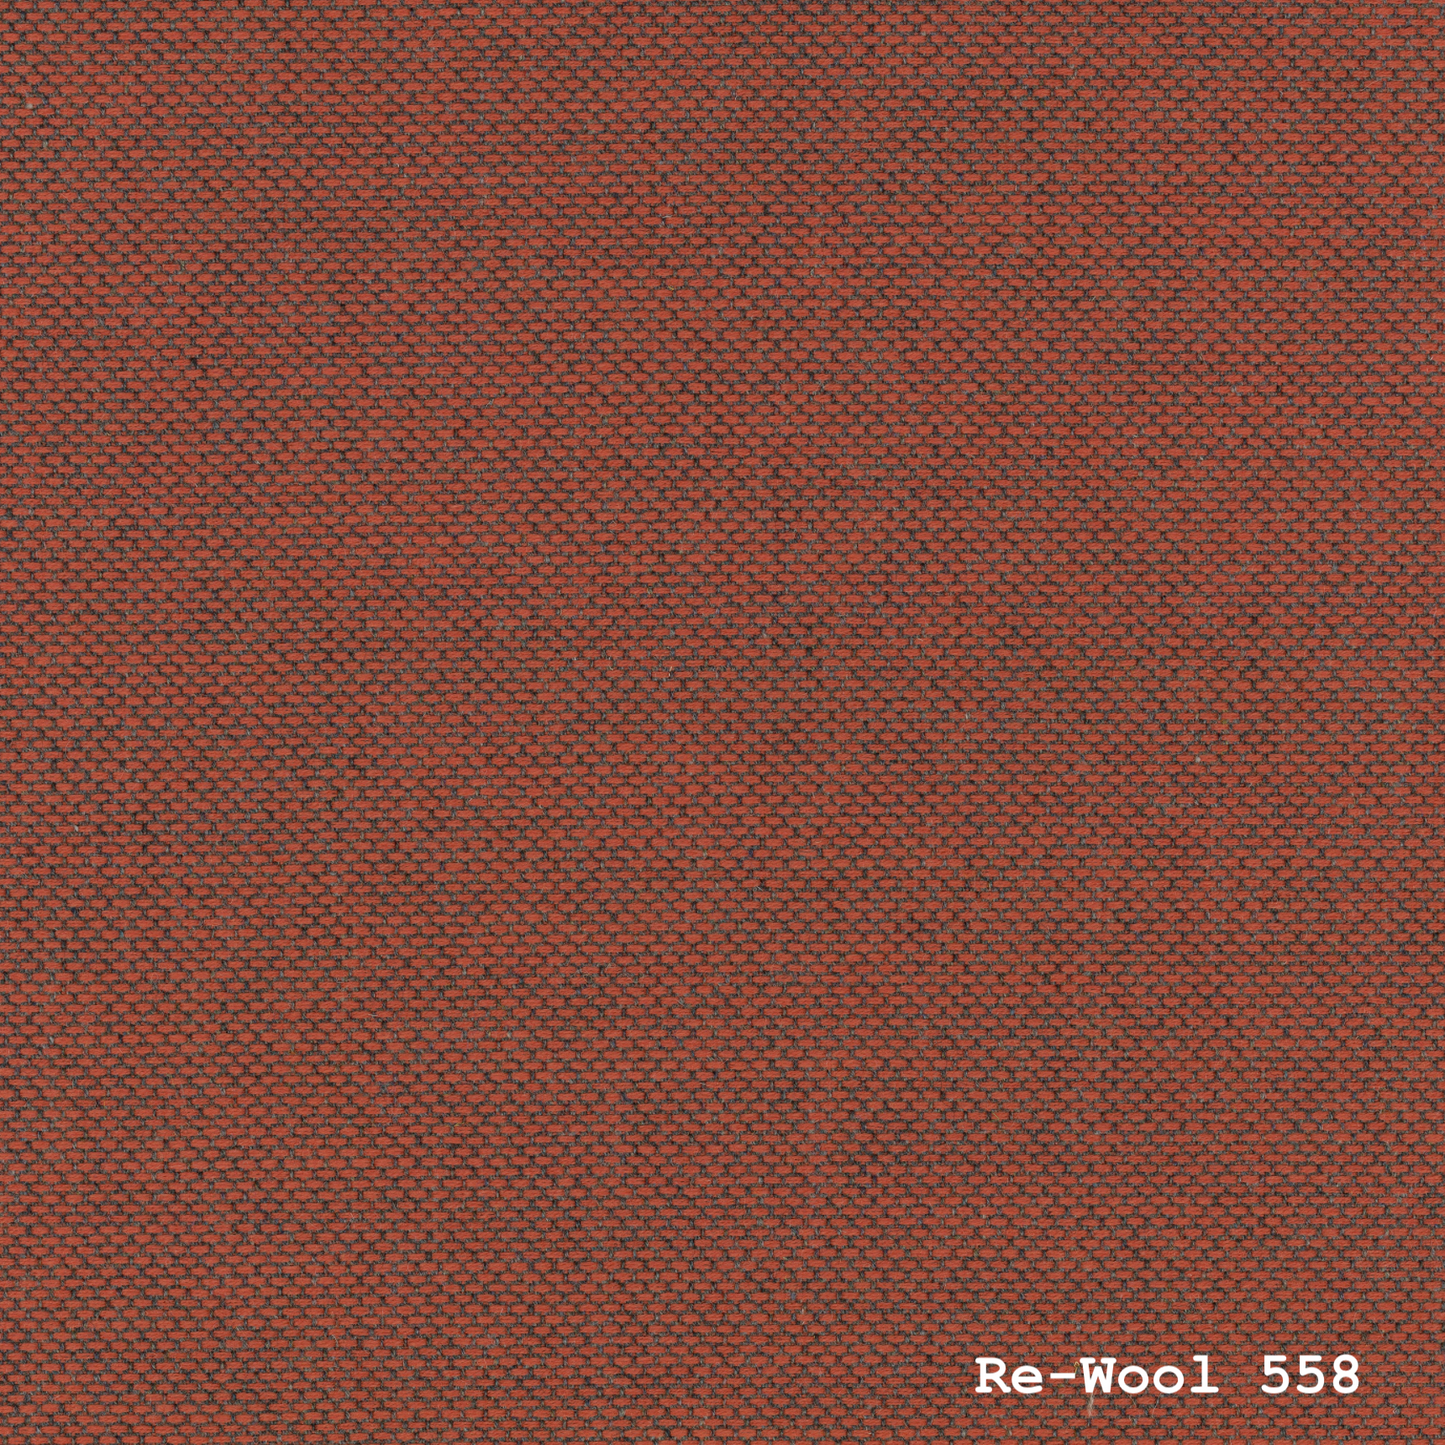 Buy Re-wool fabric from Kvadrat